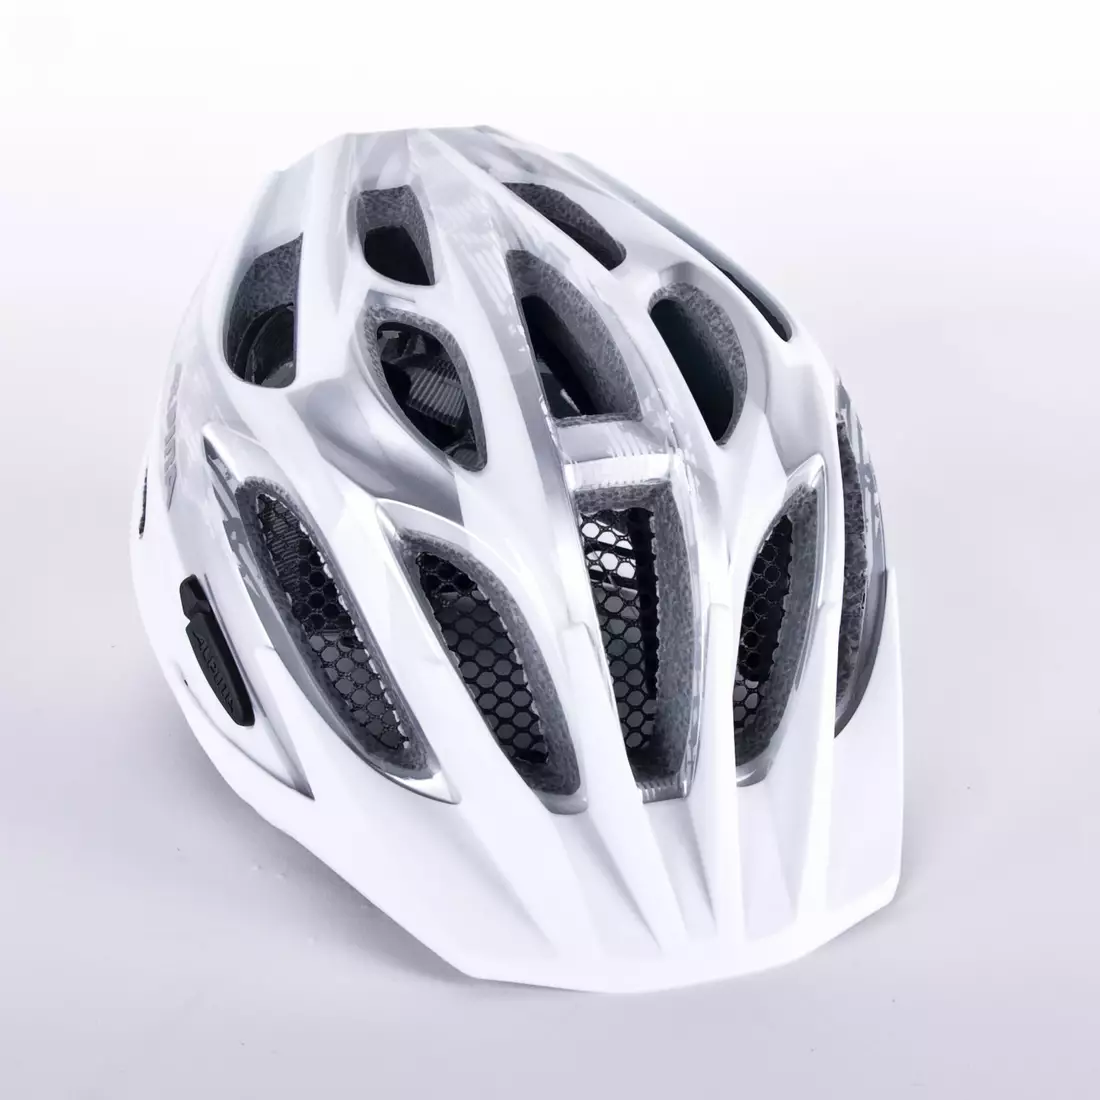 Cyklistická přilba ALPINA TOUR 2.0 stříbrná a bílá